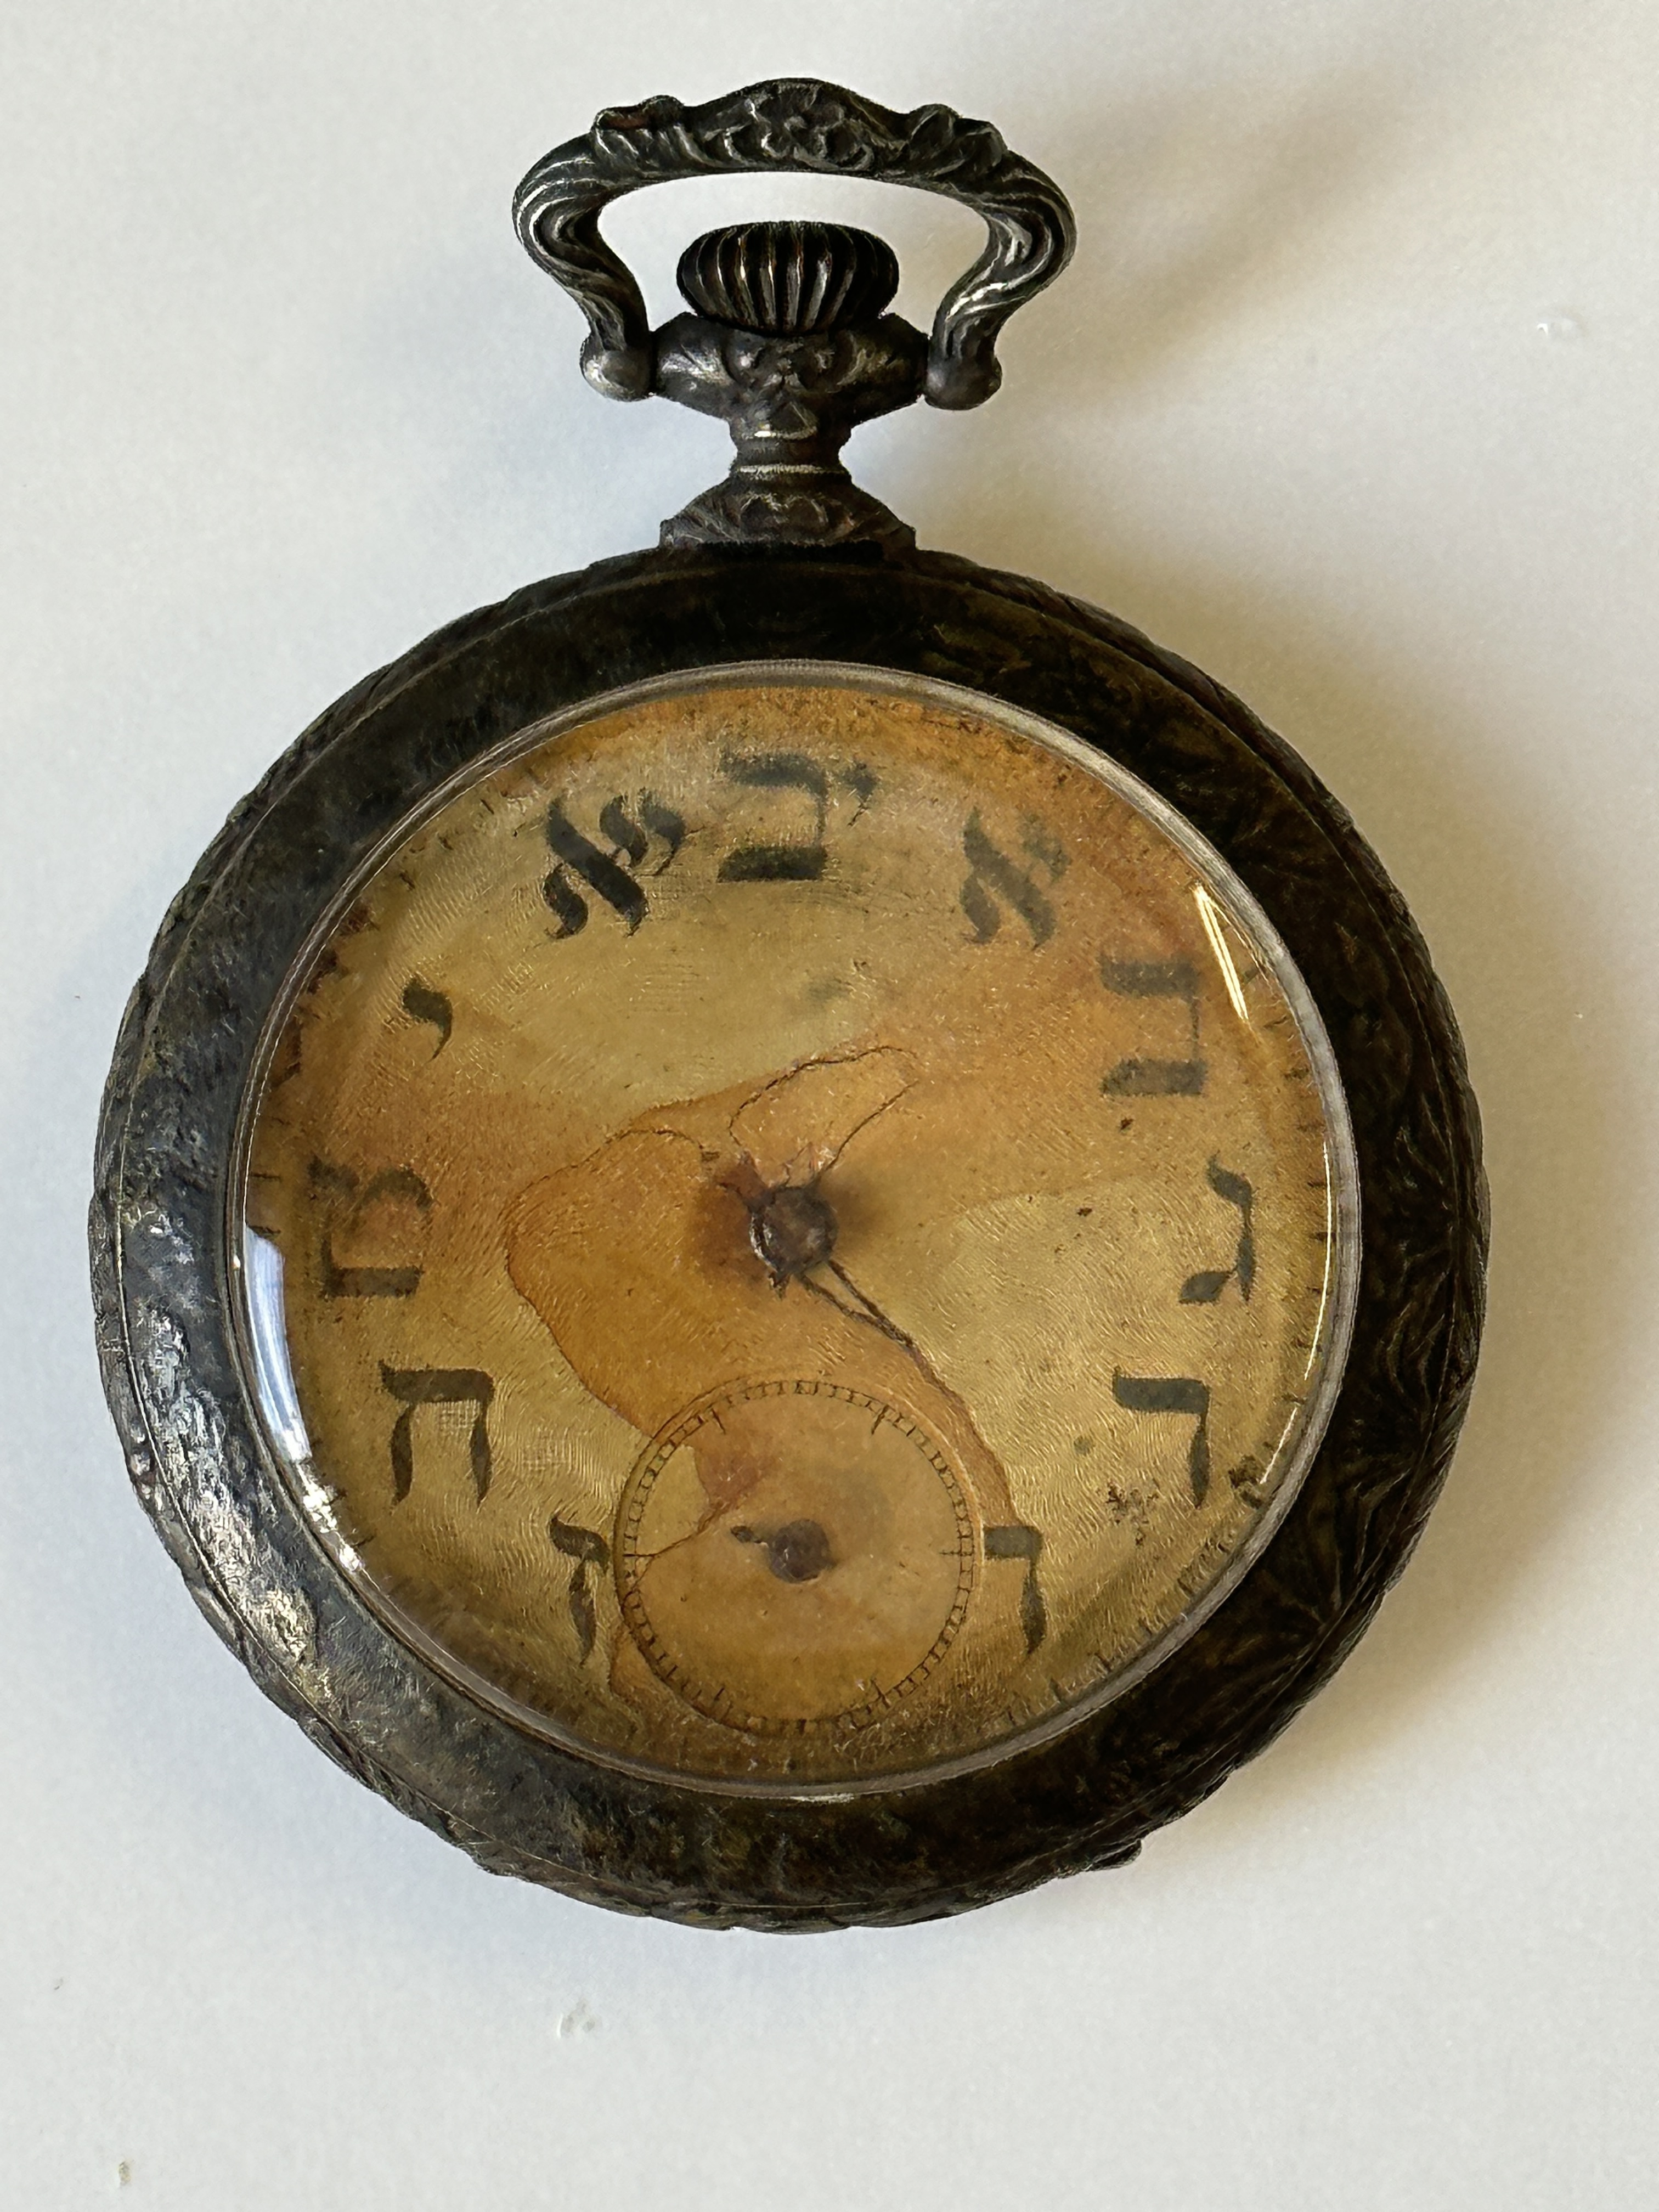 The pocket watch belonging to second-class Titanic passenger Sinai Kantor sold for £97,000 (Henry Aldridge & Son/PA)